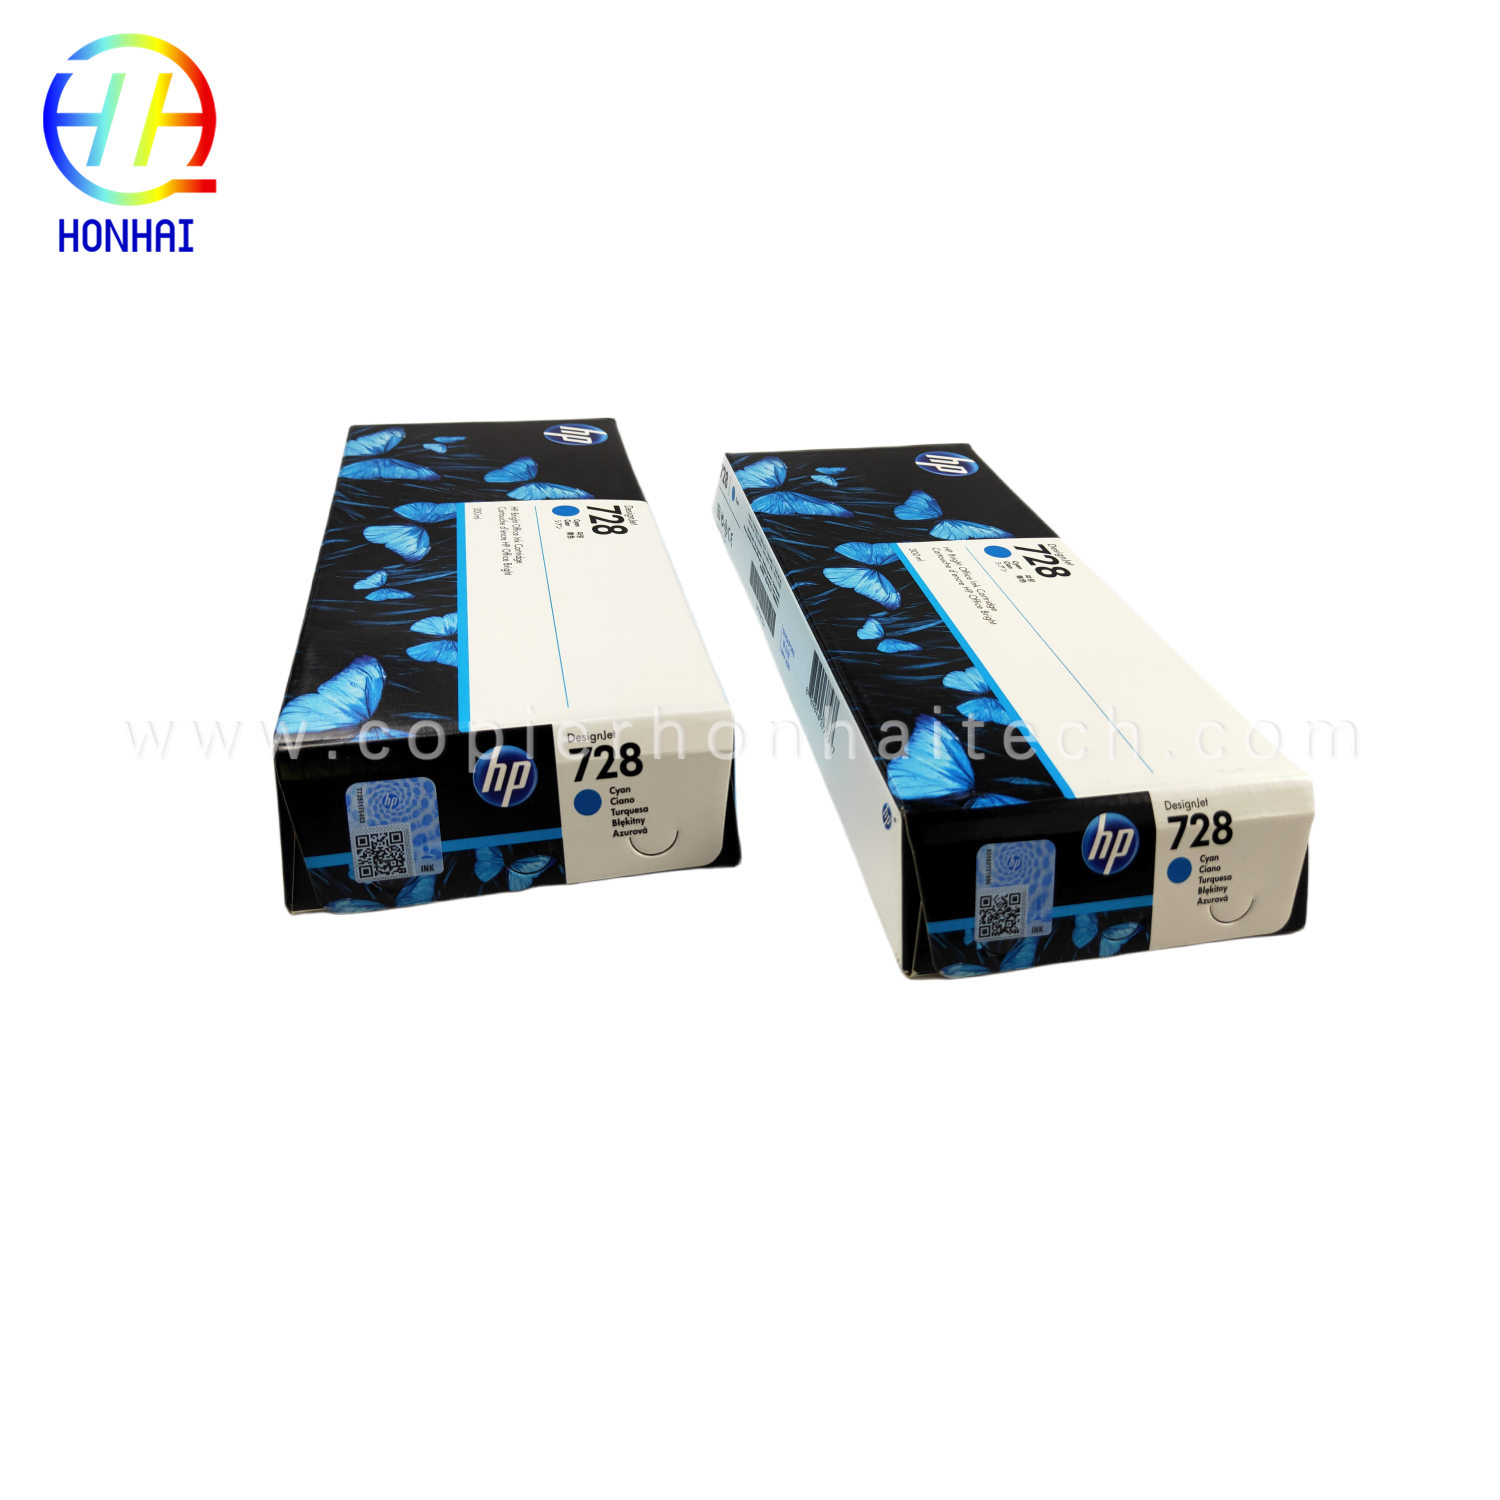 https://www.copierhonhaitech.com/original-new-ink-cartridge-cyan-for-hp-designjet-t730-and-t830-large-format-plotter-printers-and-hp-729-designjet-printhead- 728-f9k17a-उत्पादन/